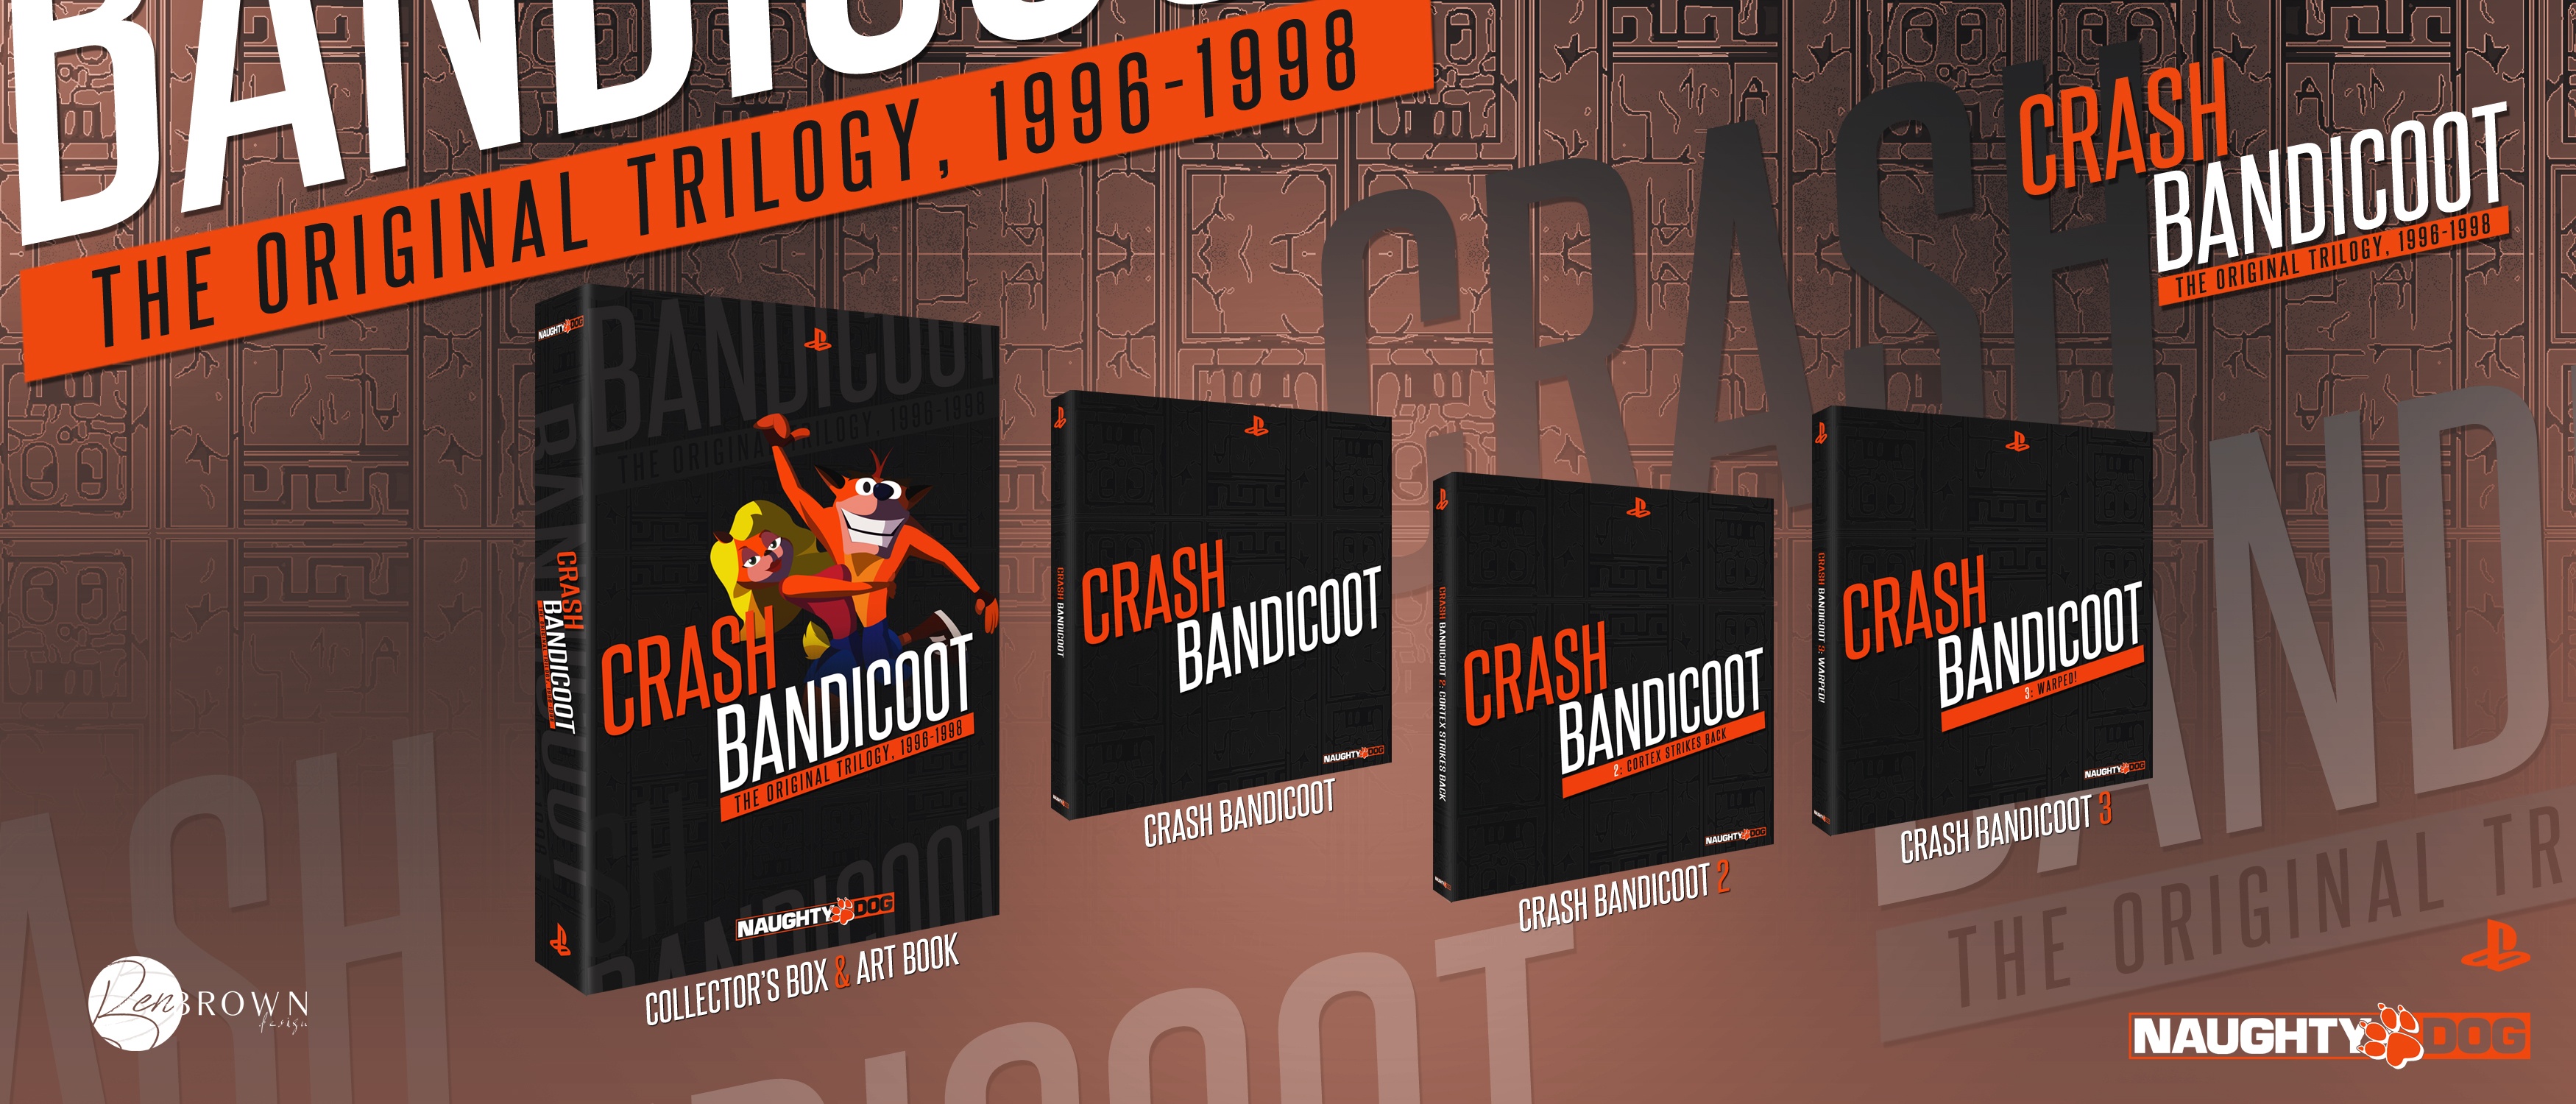 Crash Bandicoot Collection box cover